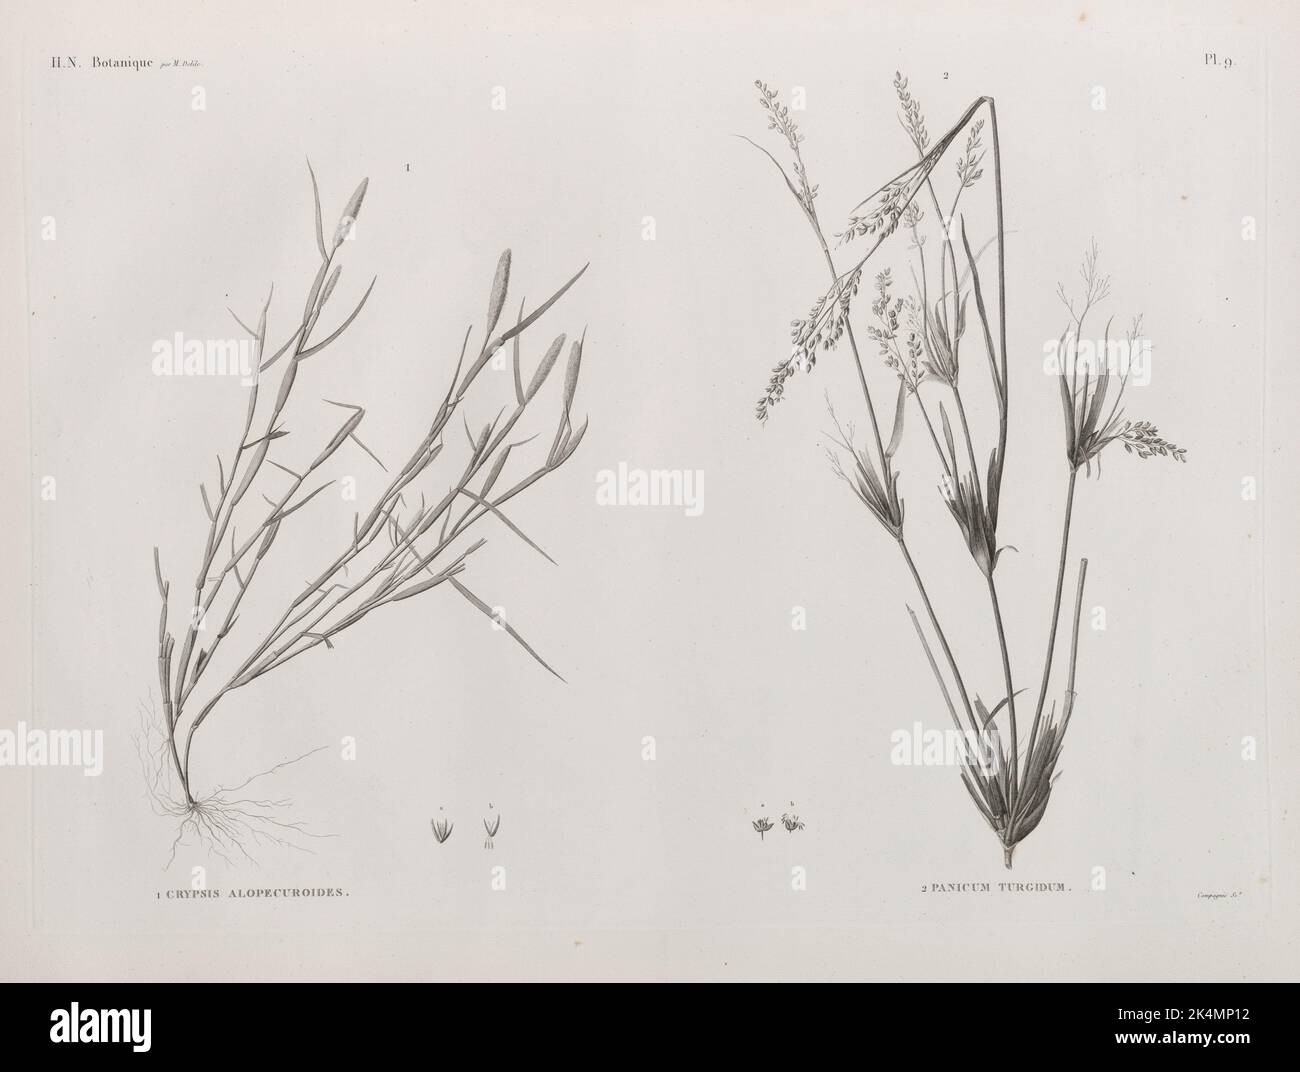 Botanical. 1. Crypsis alopecuroides; 2. Panicum turgidum. Jomard, M. (Edme-Francois), 1777-1862 (Editor). Description of Egypt: or, Collection of Stock Photo